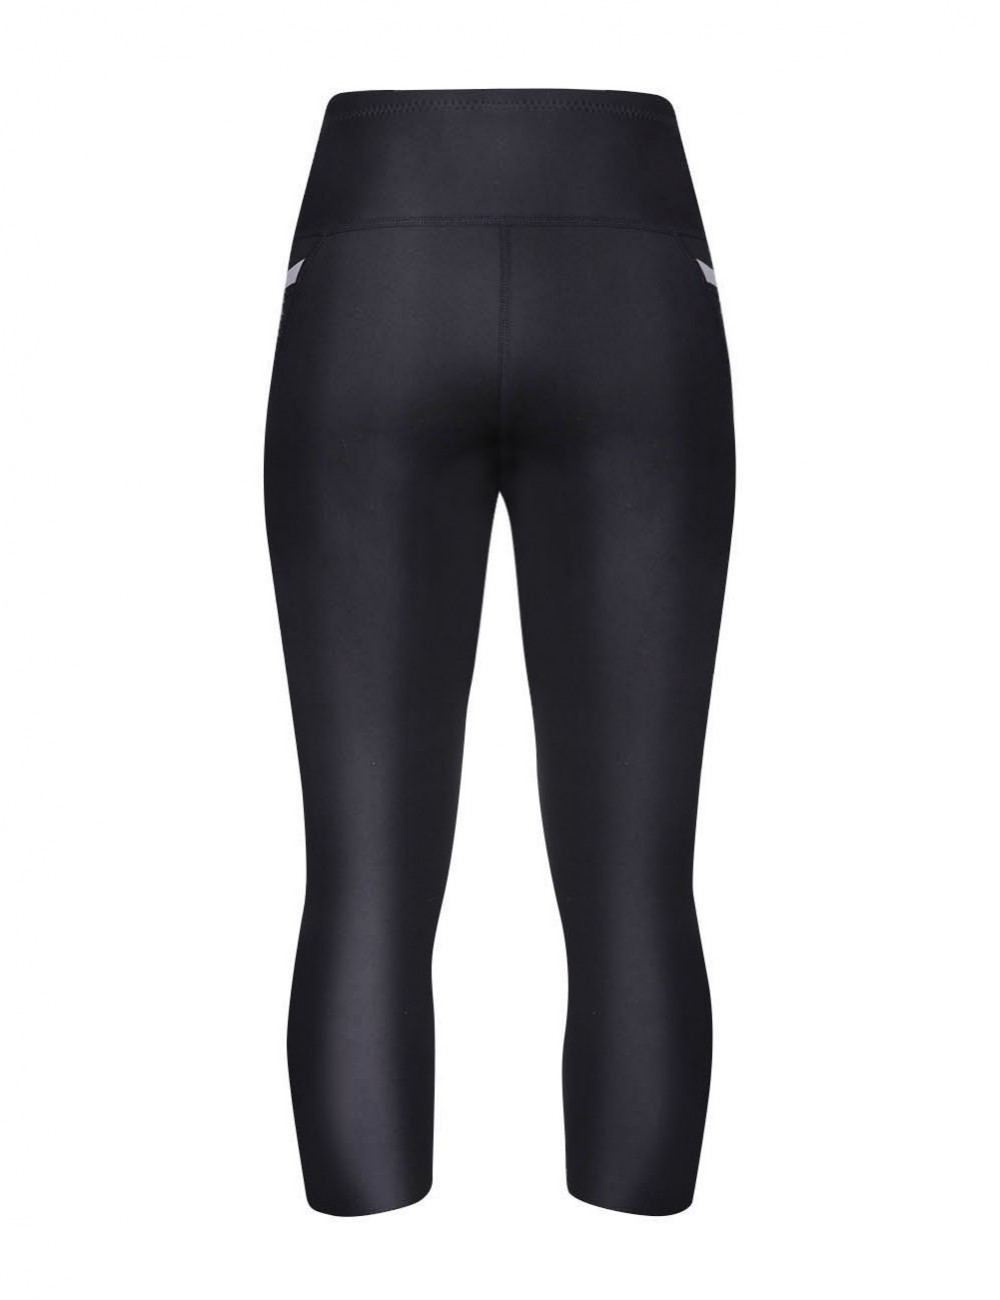 Black Big Size Reflective Neoprene Shapewear Capri Leggings High Waist For Running